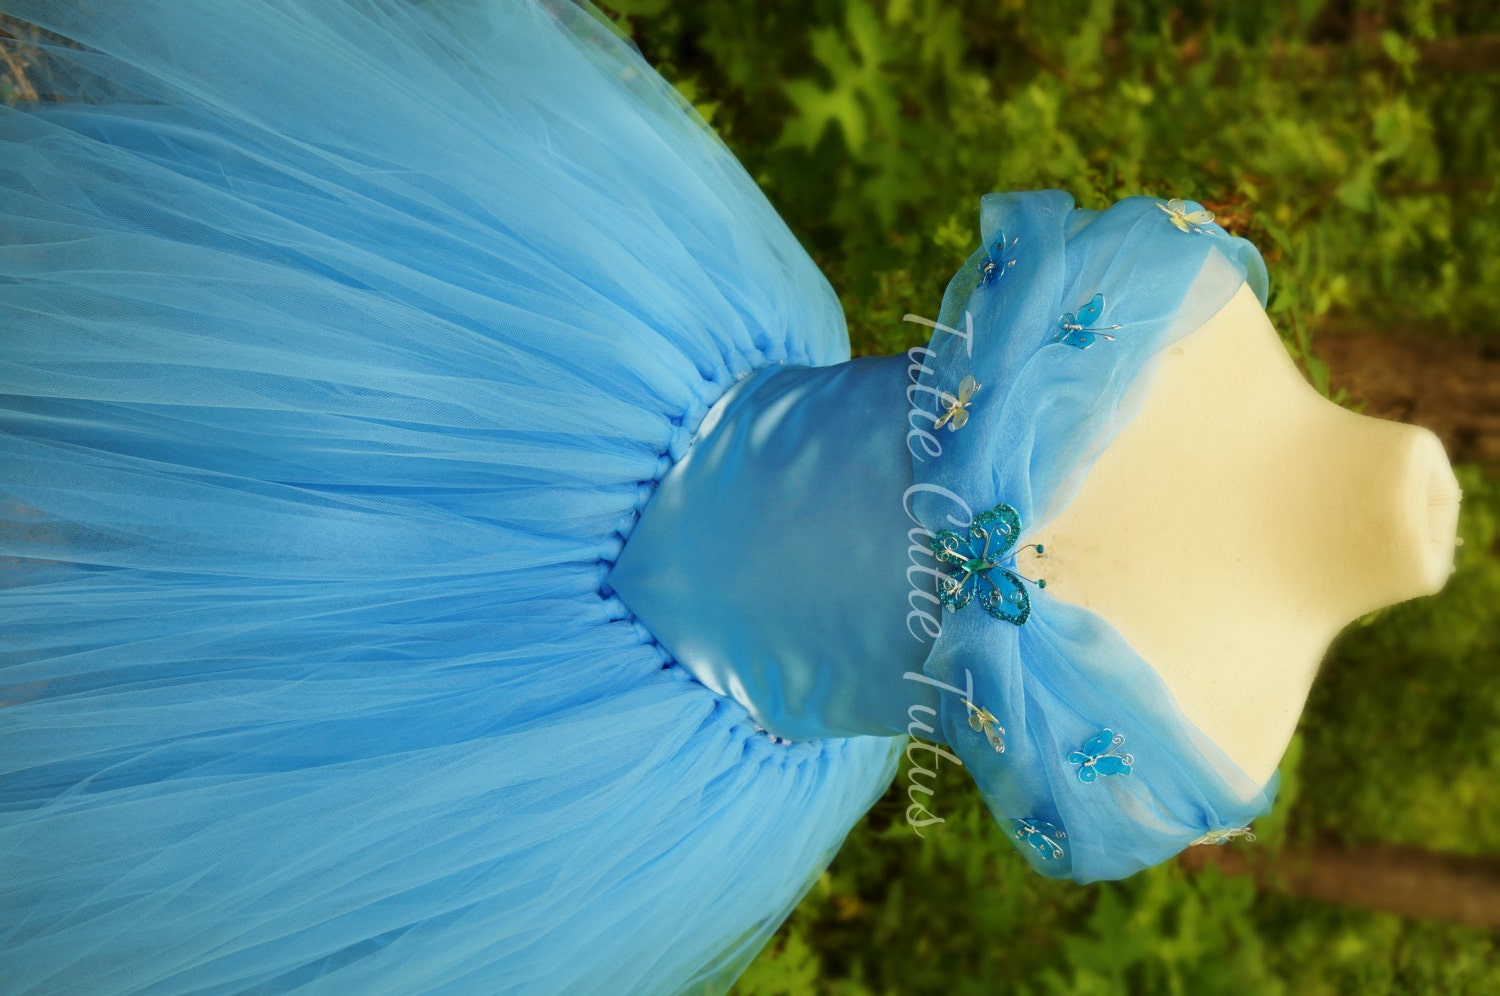 2015 New Cinderella Inspired Disney Princess Tutu Dress